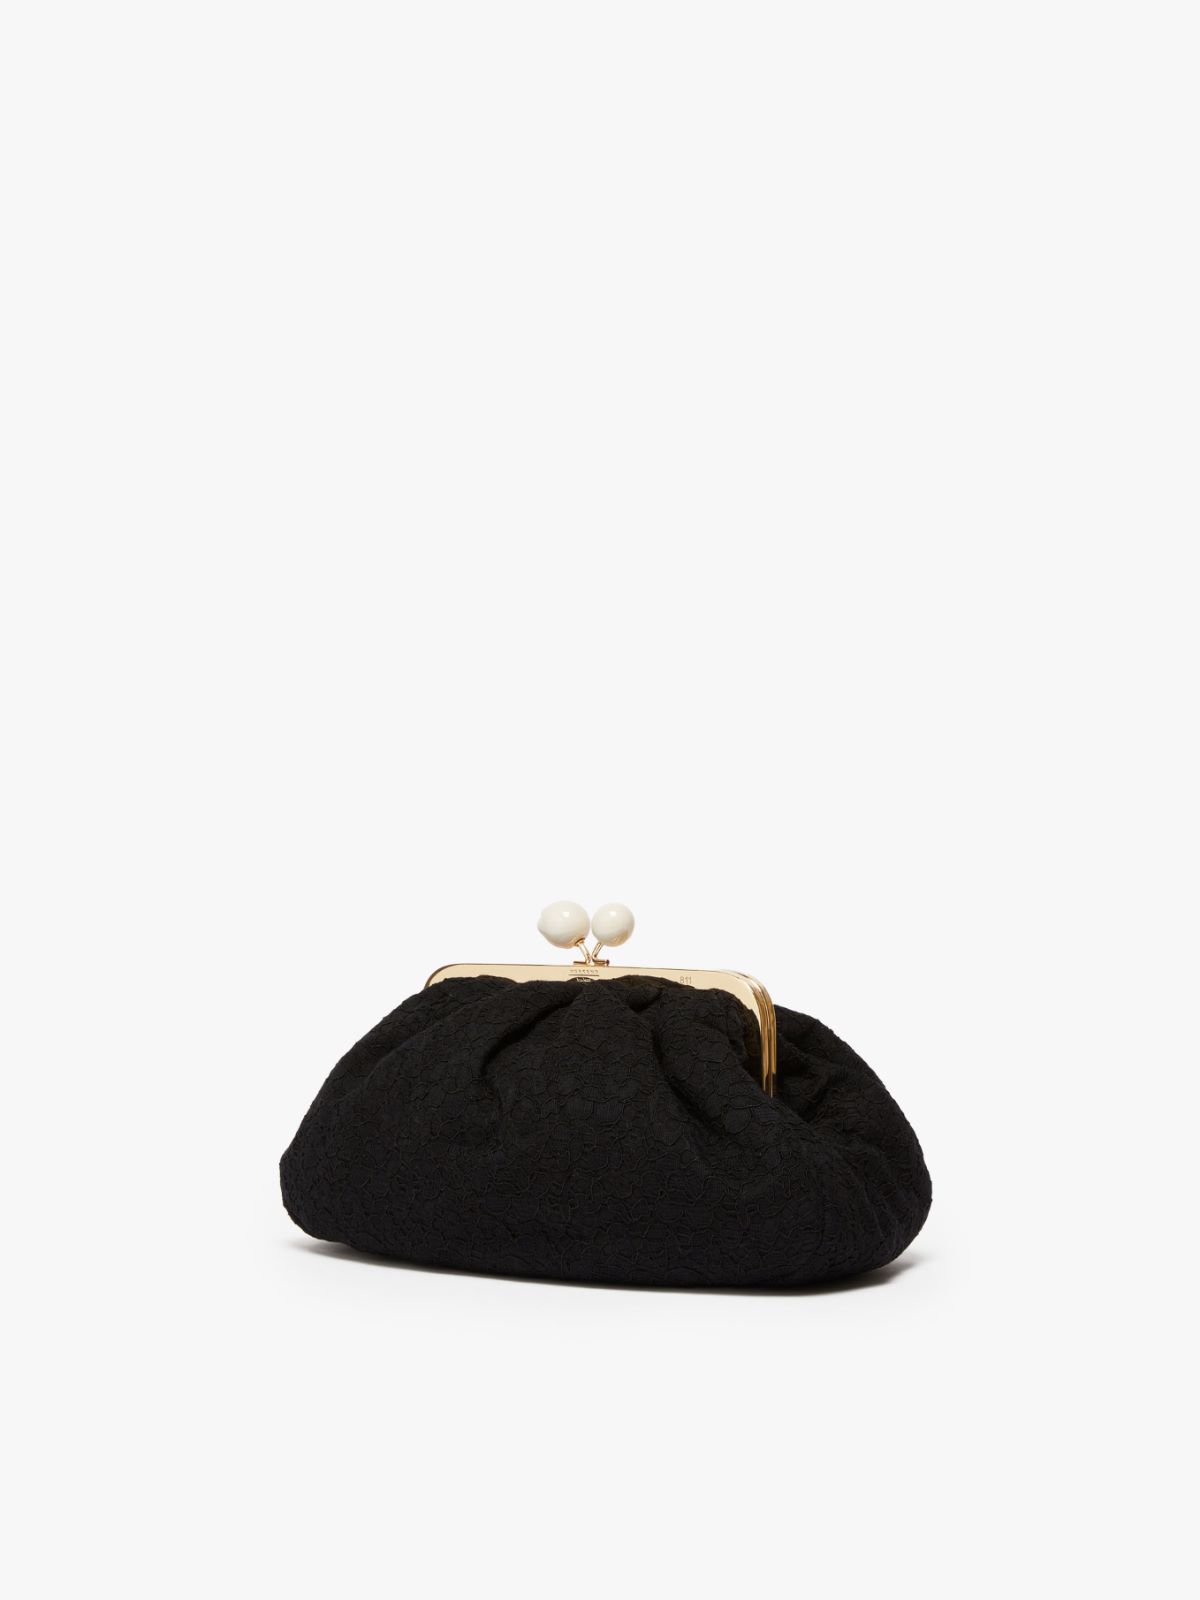 Medium Pasticcino Bag in lace - BLACK - Weekend Max Mara - 2